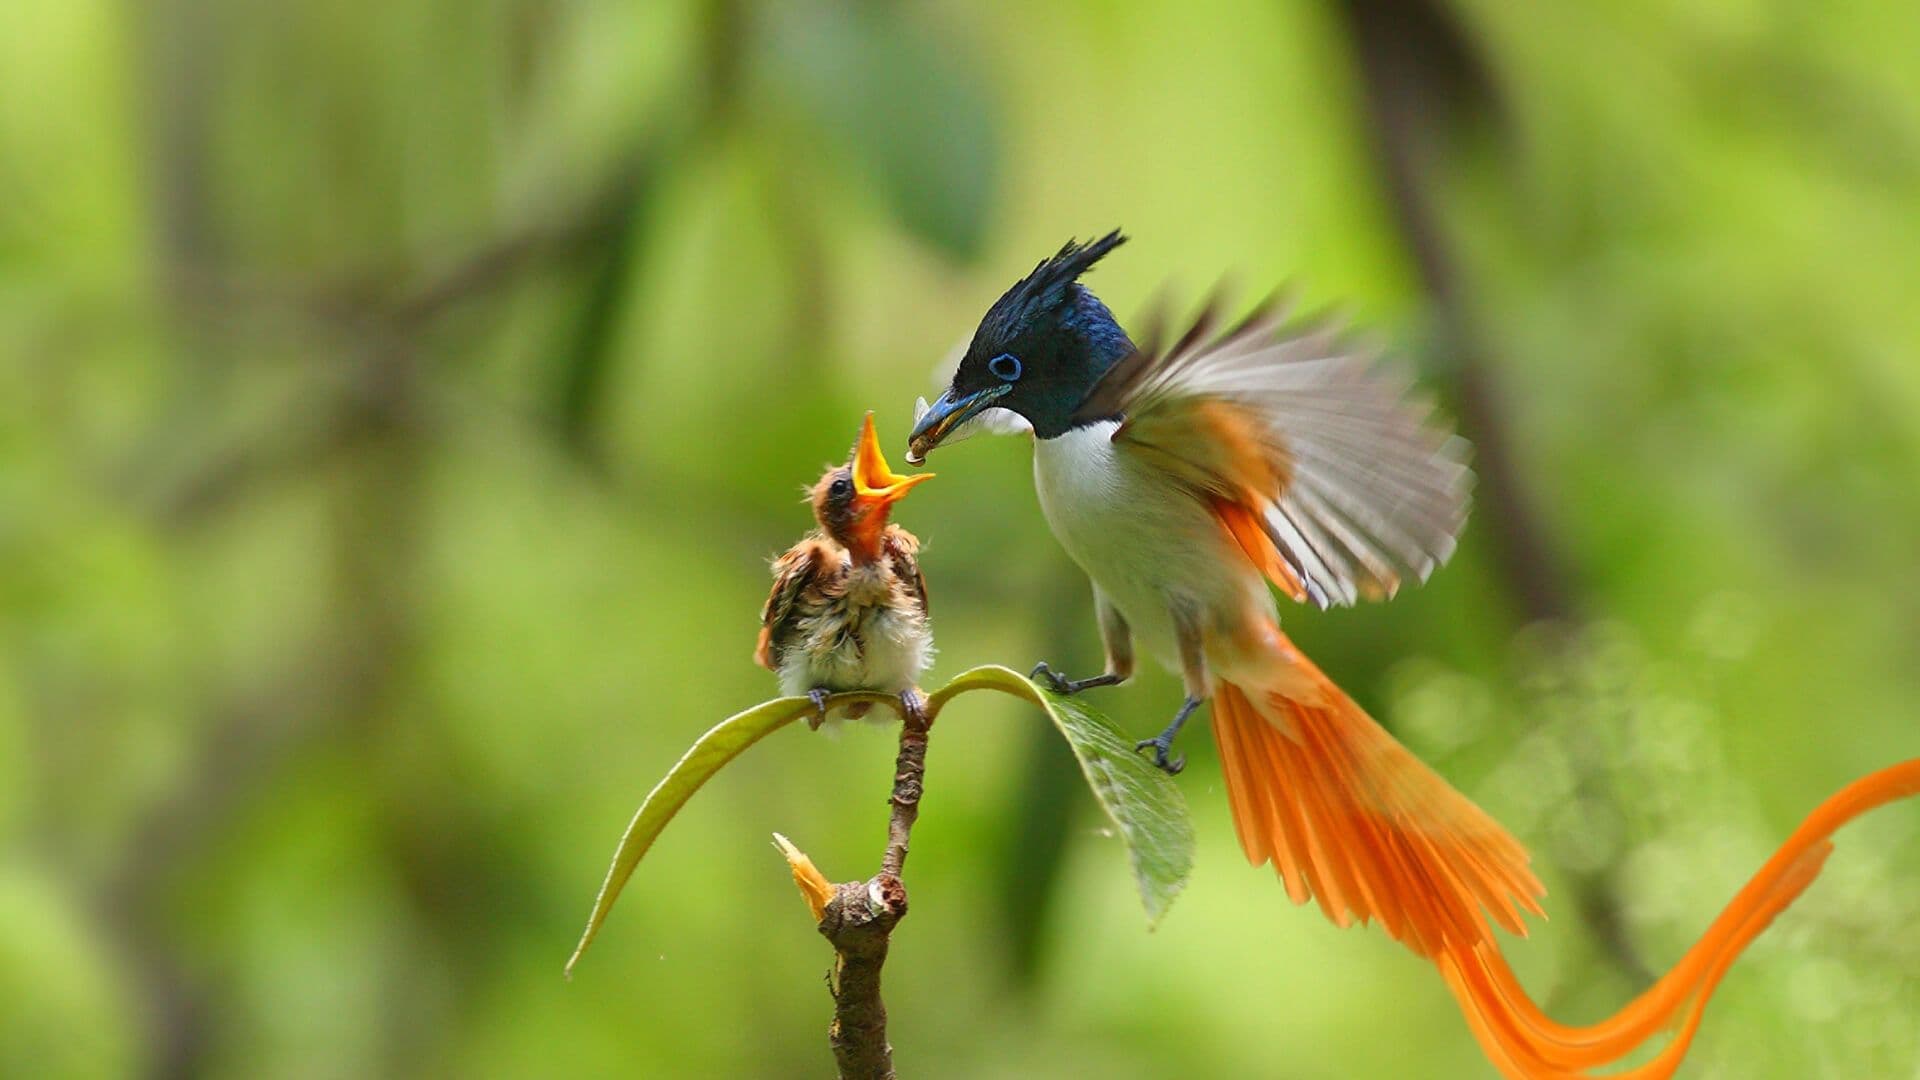 A view of a beautiful bird feed the kid in Muthurajawela Marsh Sri Lanka